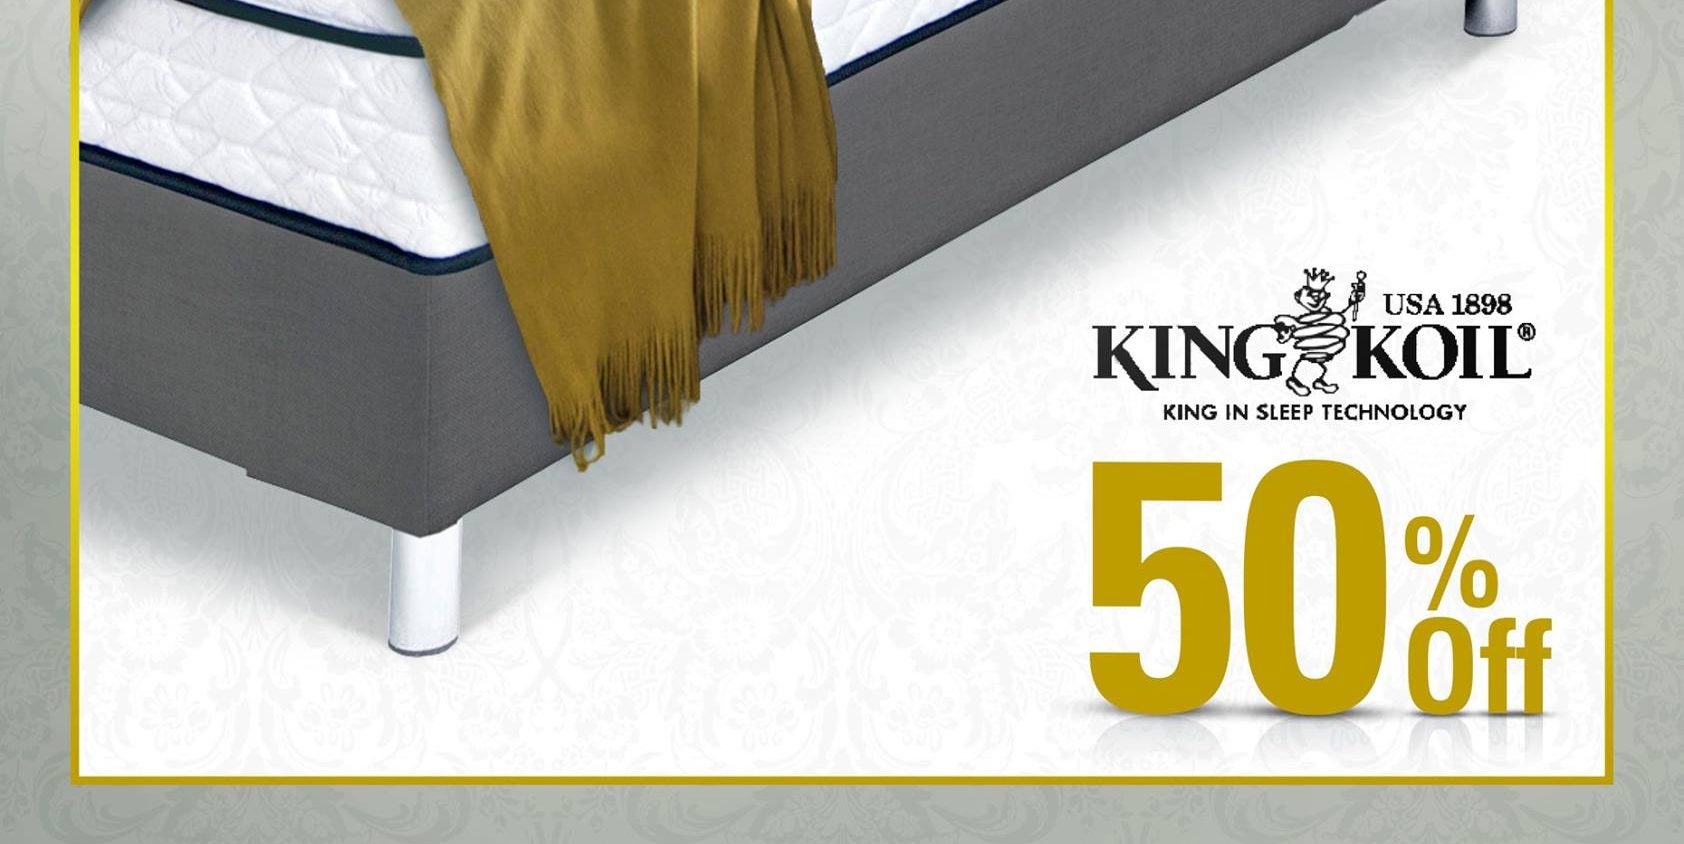 Divano Boutique Studio Singapore 50% Off King Koil Mattresses Promotion 29 Apr – 1 May 2017